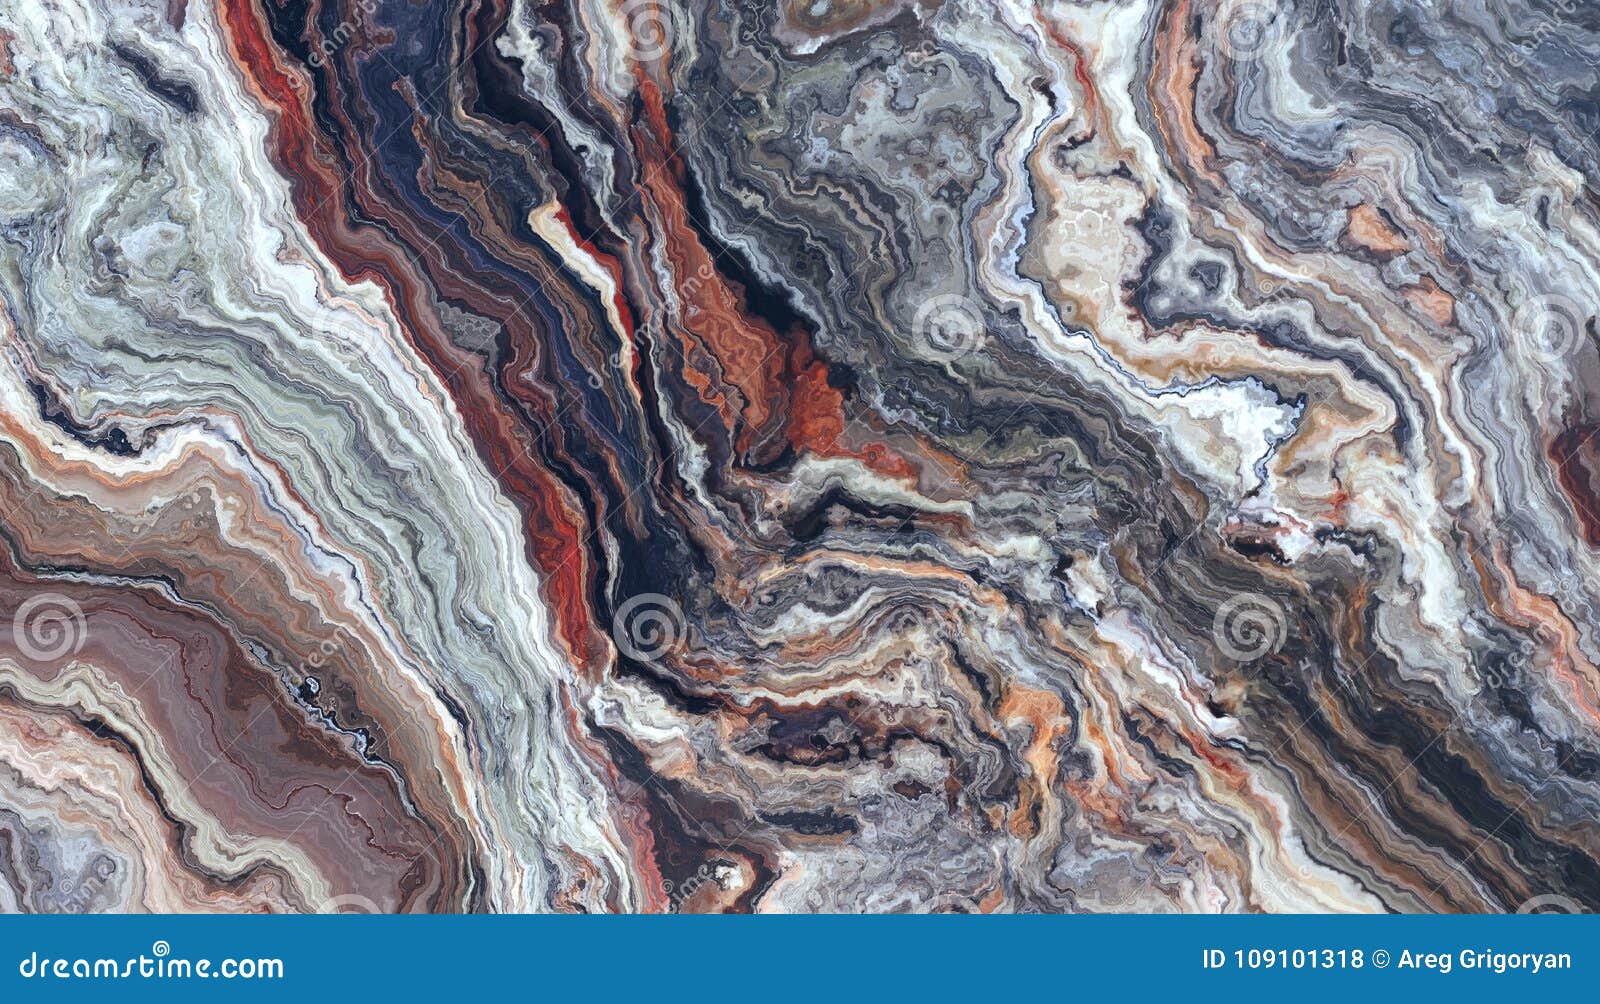 onyx stone colorful pattern